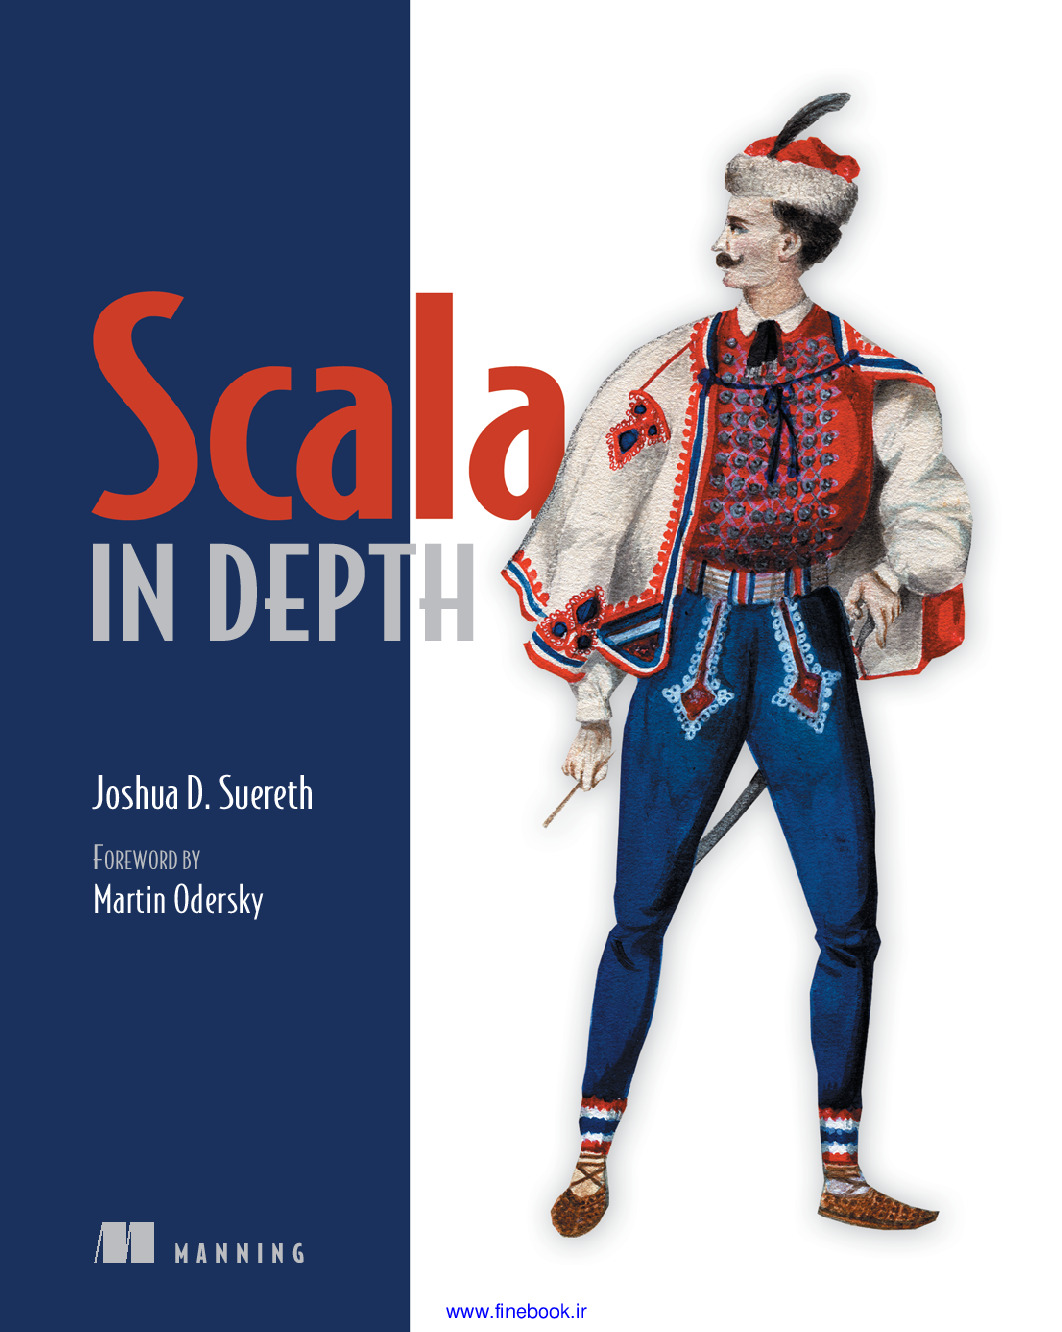 Scala-in-Depth